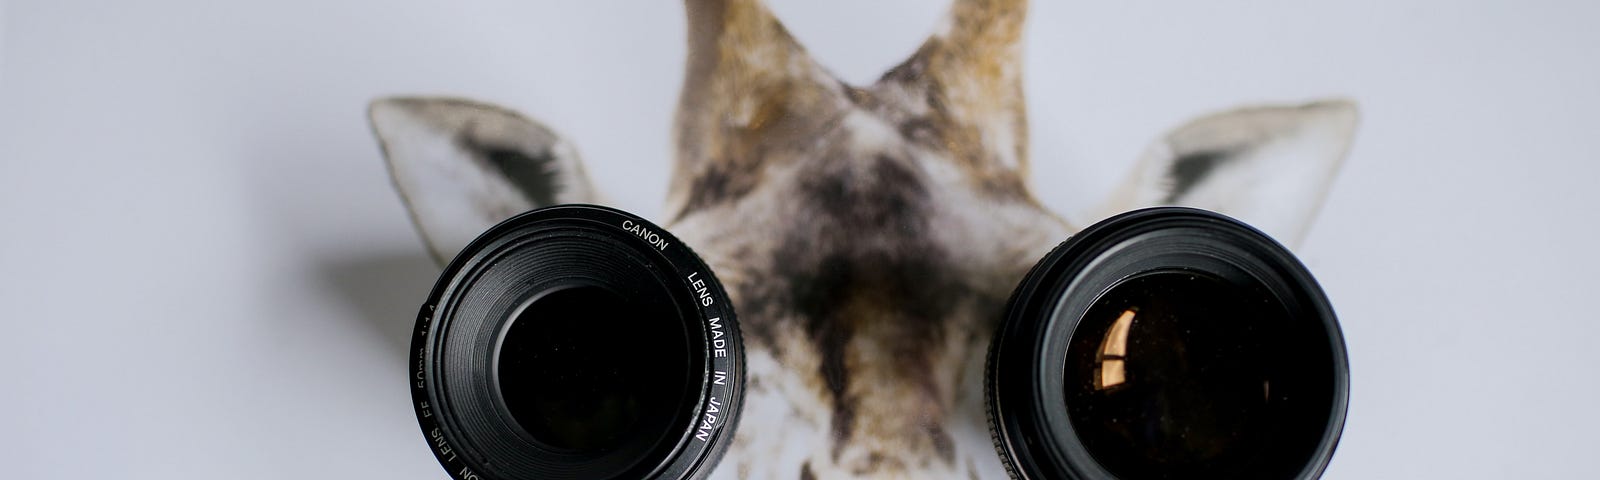 Giraffe wearing telephoto lens